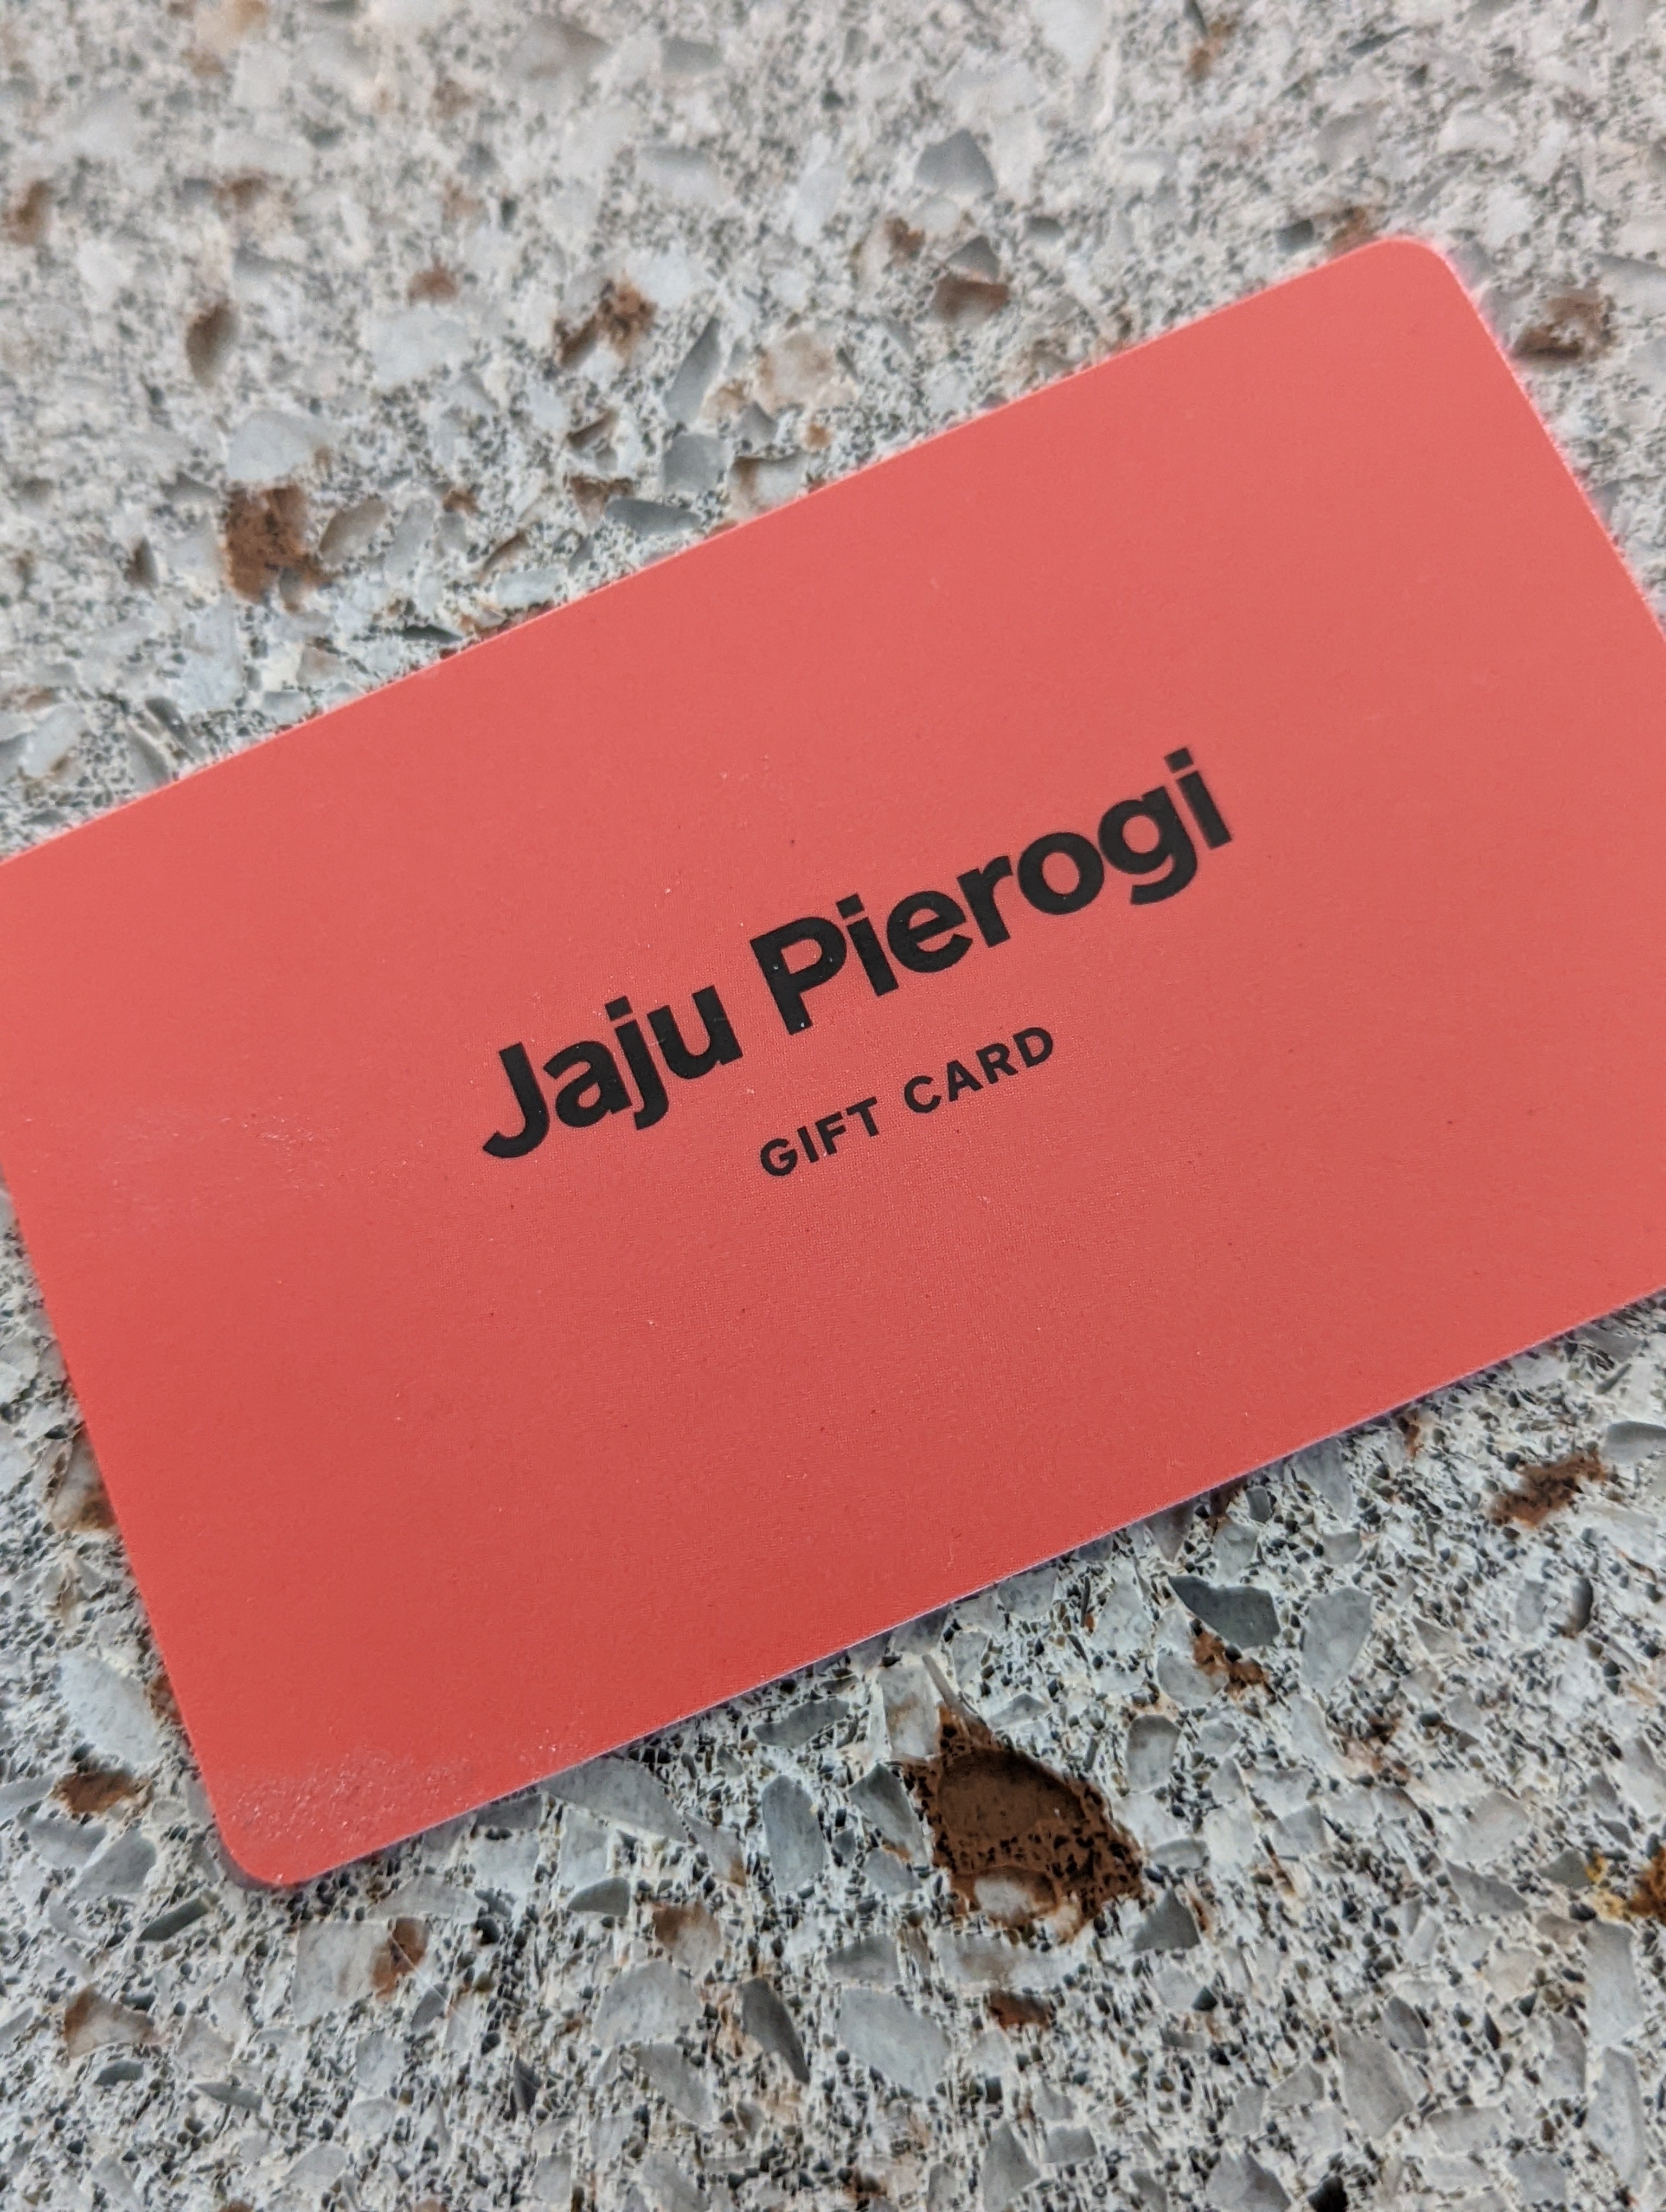 Jaju Pierogi Gift Card